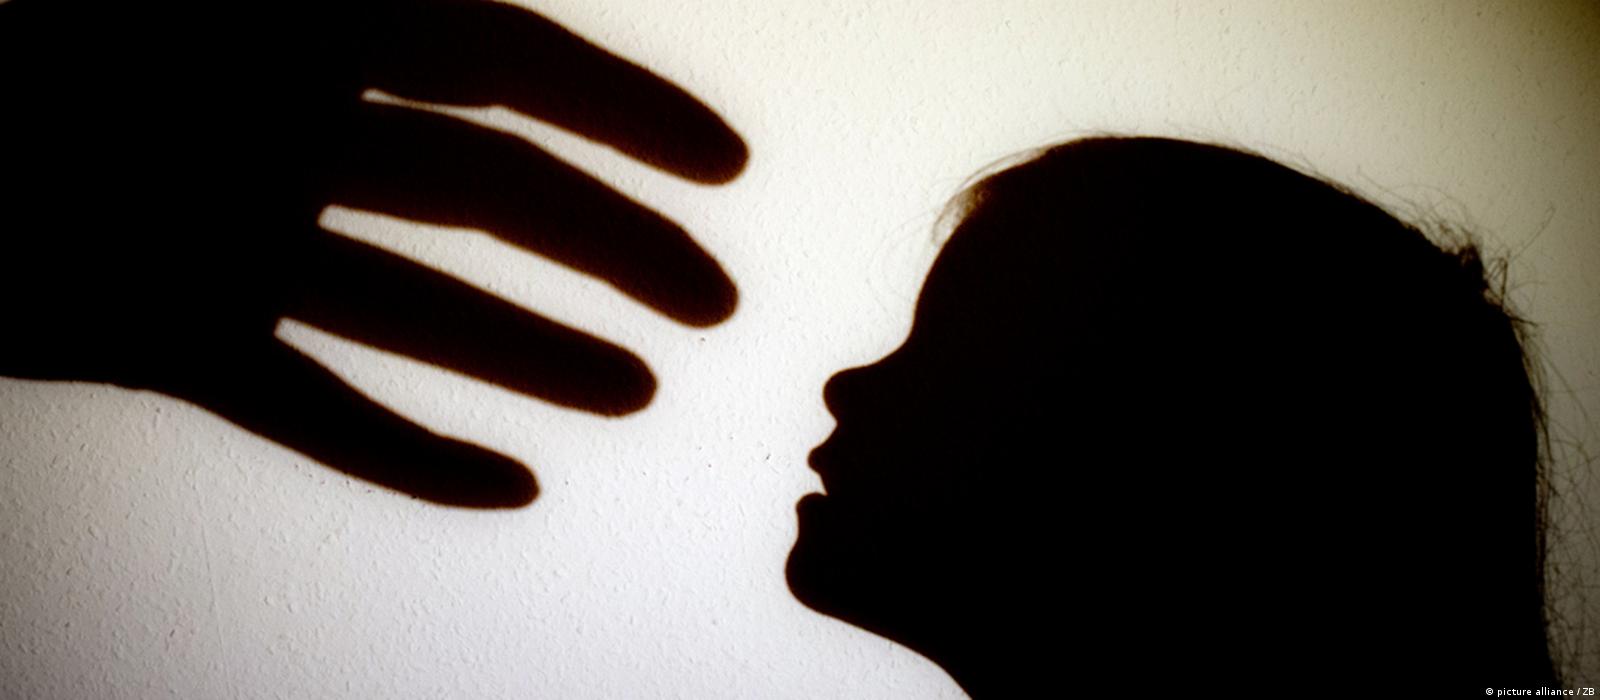 12yer Girl Xxx - Sex crimes, child rapes horrify Bangladesh â€“ DW â€“ 07/10/2019